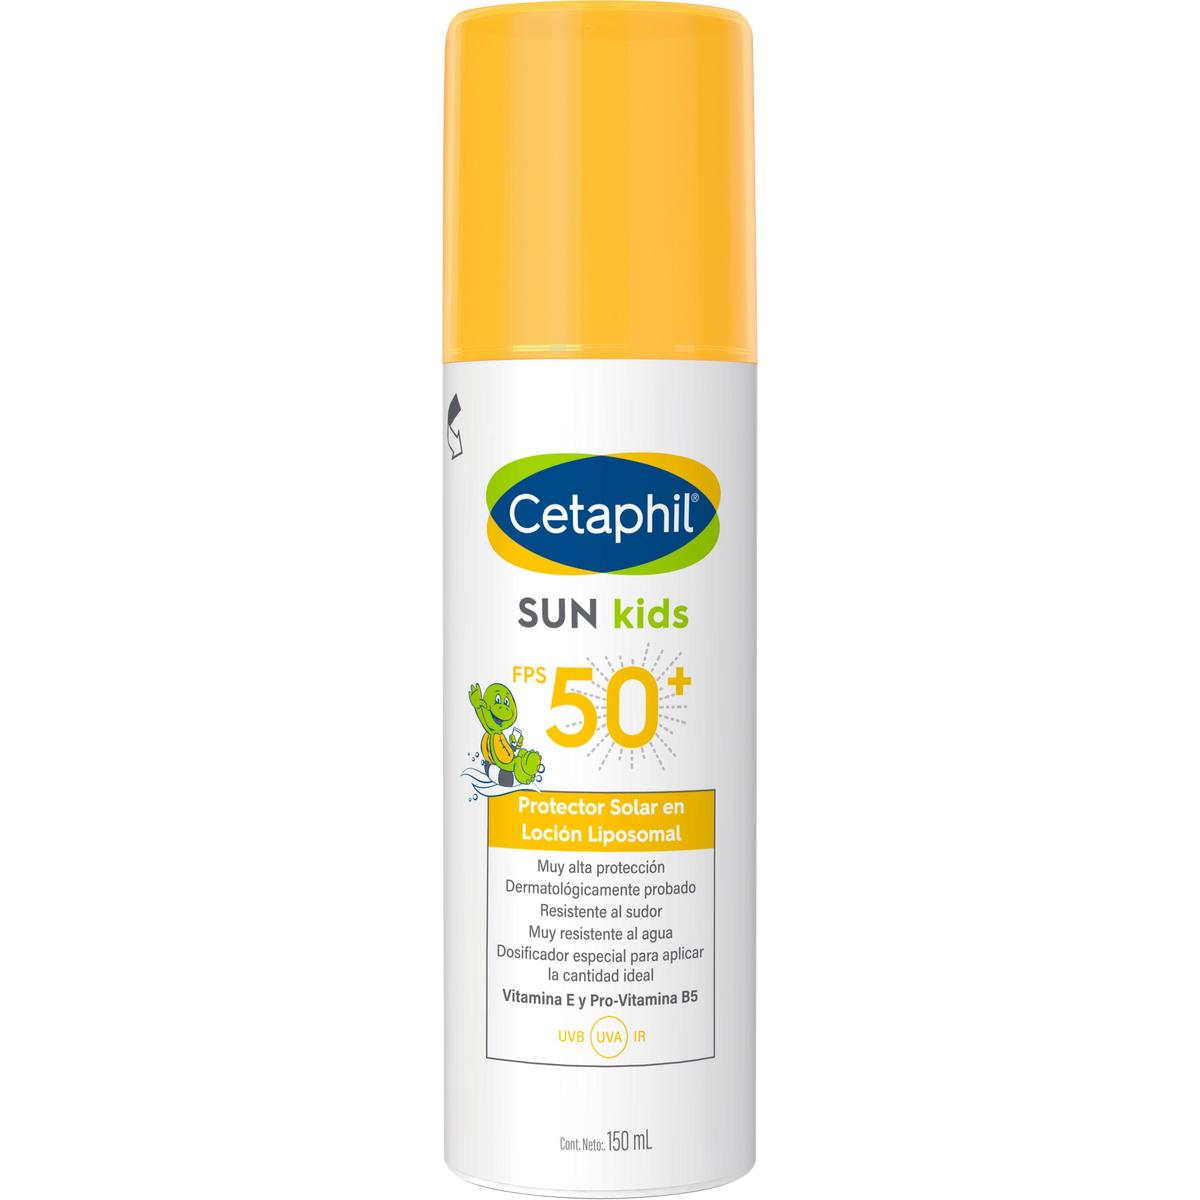 Cetaphil Sun Kids FPS50+, Protector solar para niños, 150ml